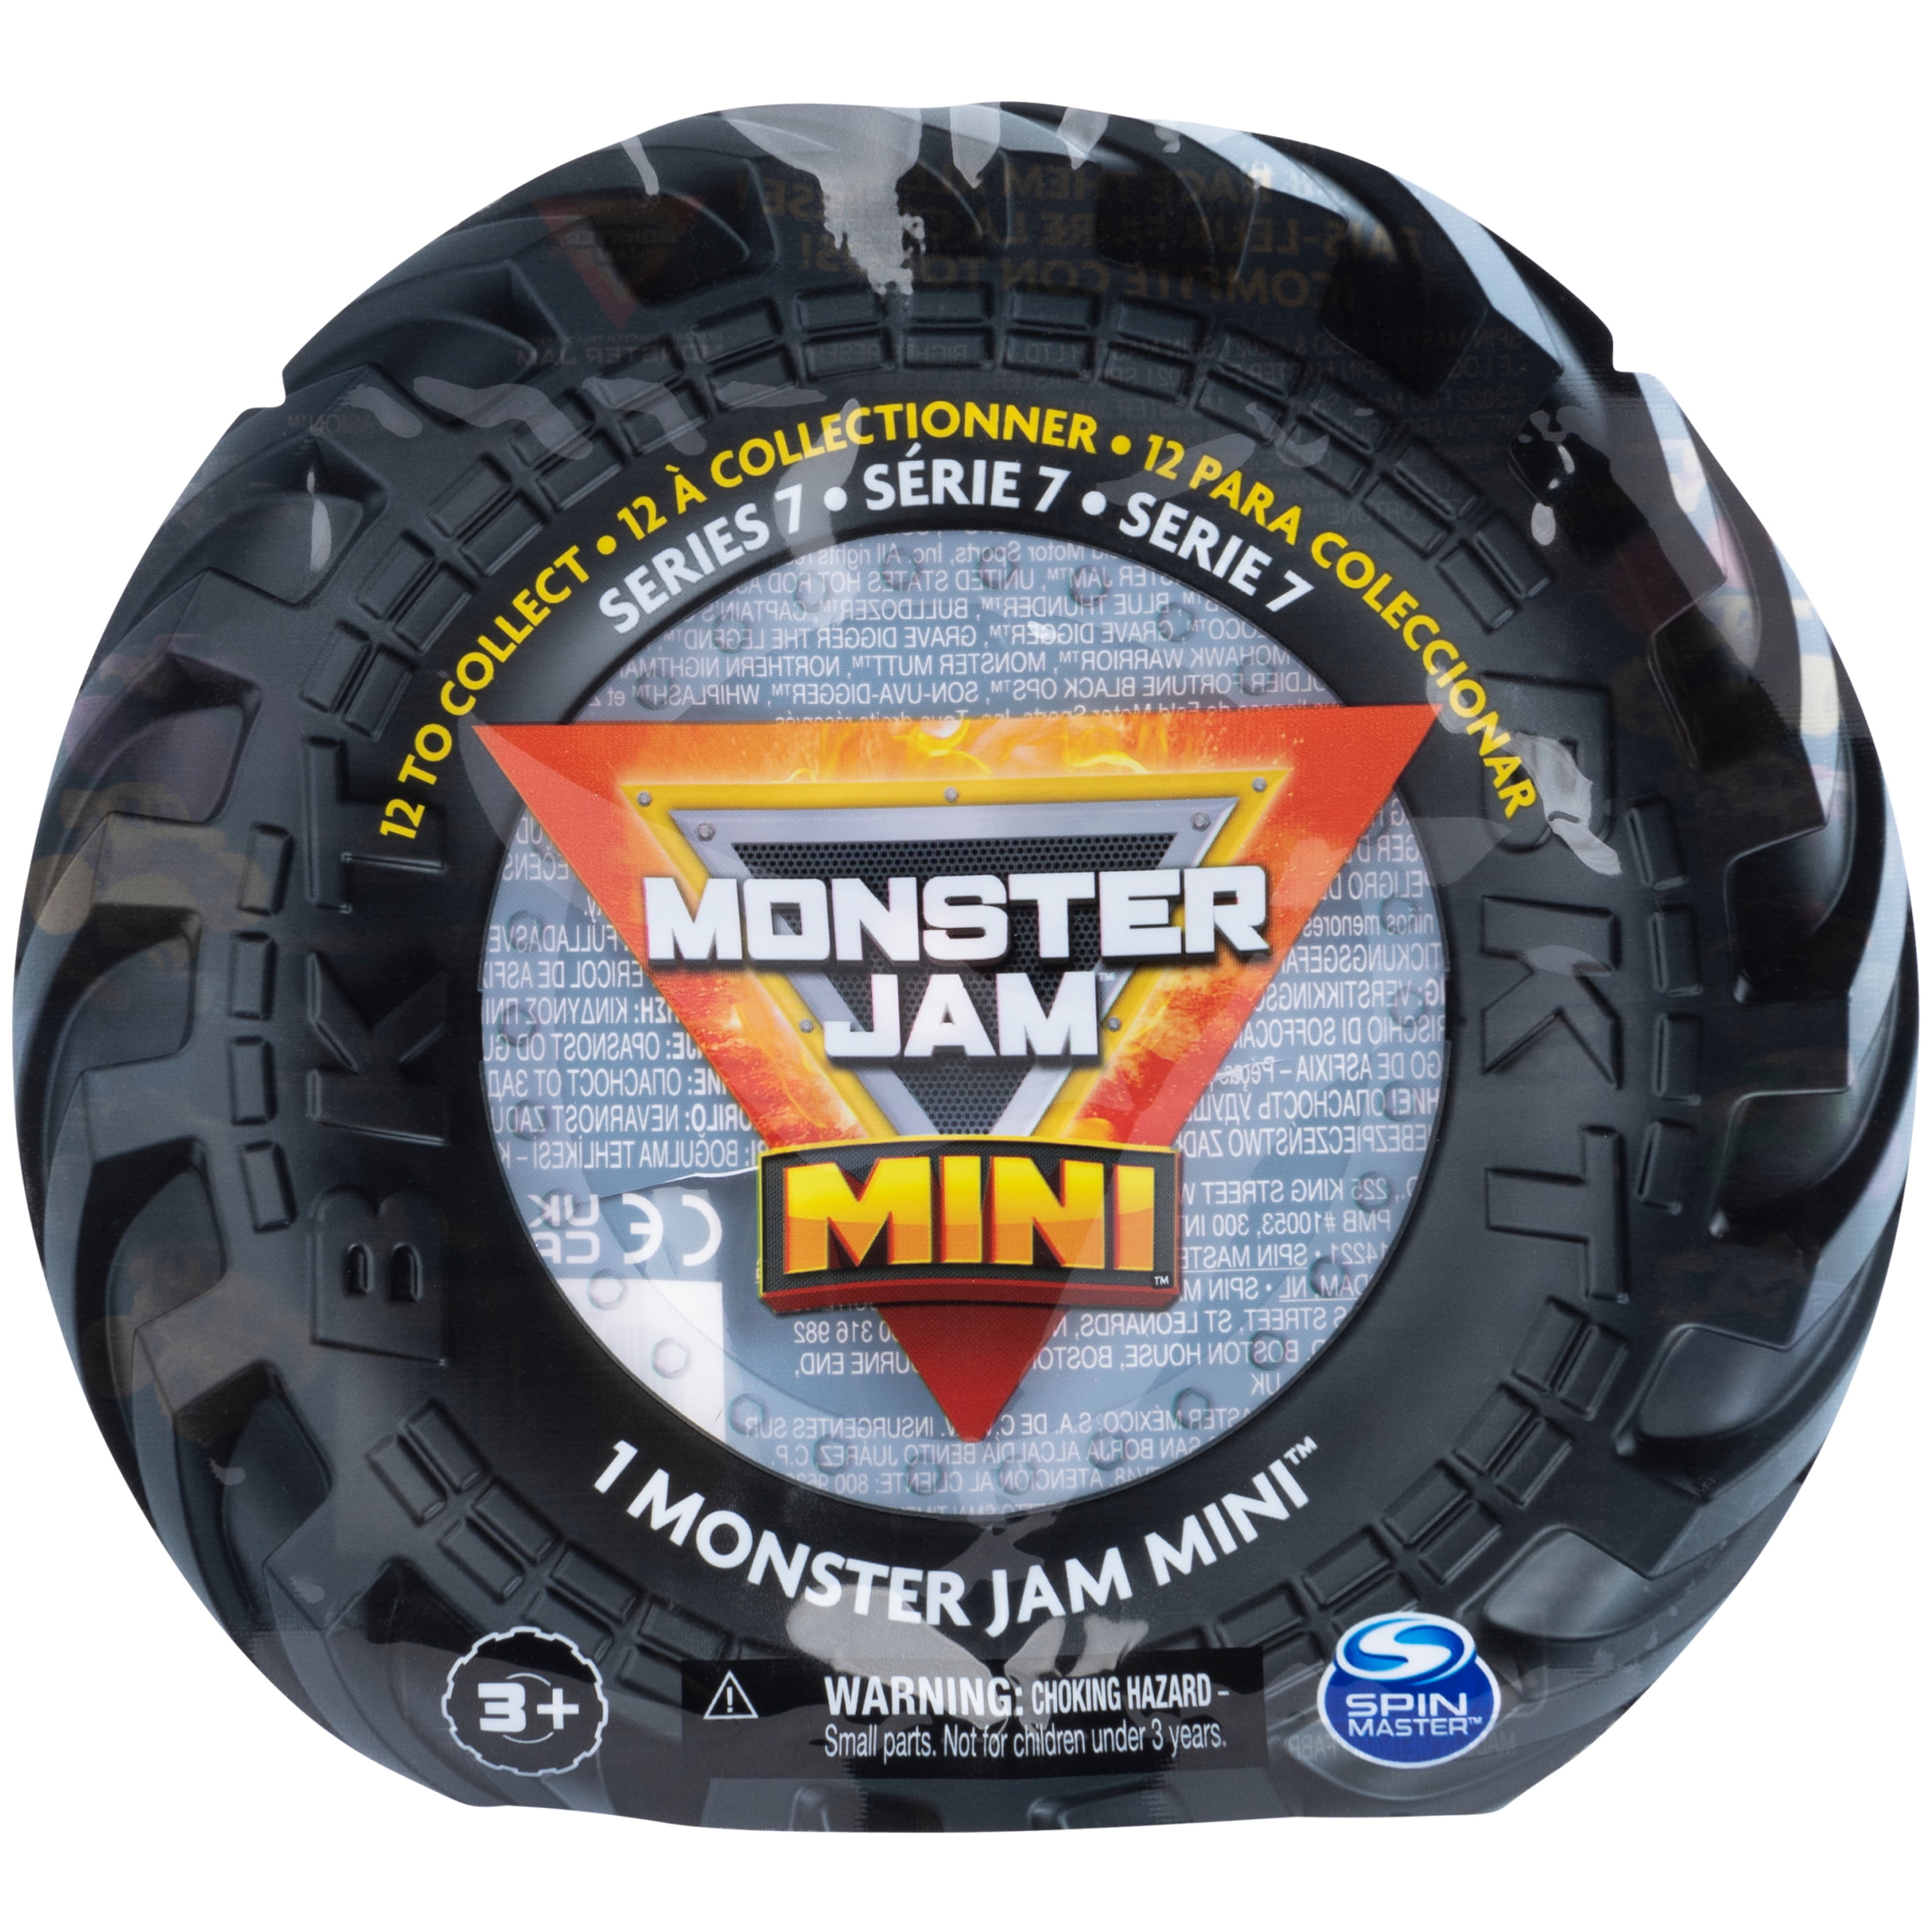 Monster Jam, Mini Mystery 1:87 Scale Monster Truck (Styles May Vary)